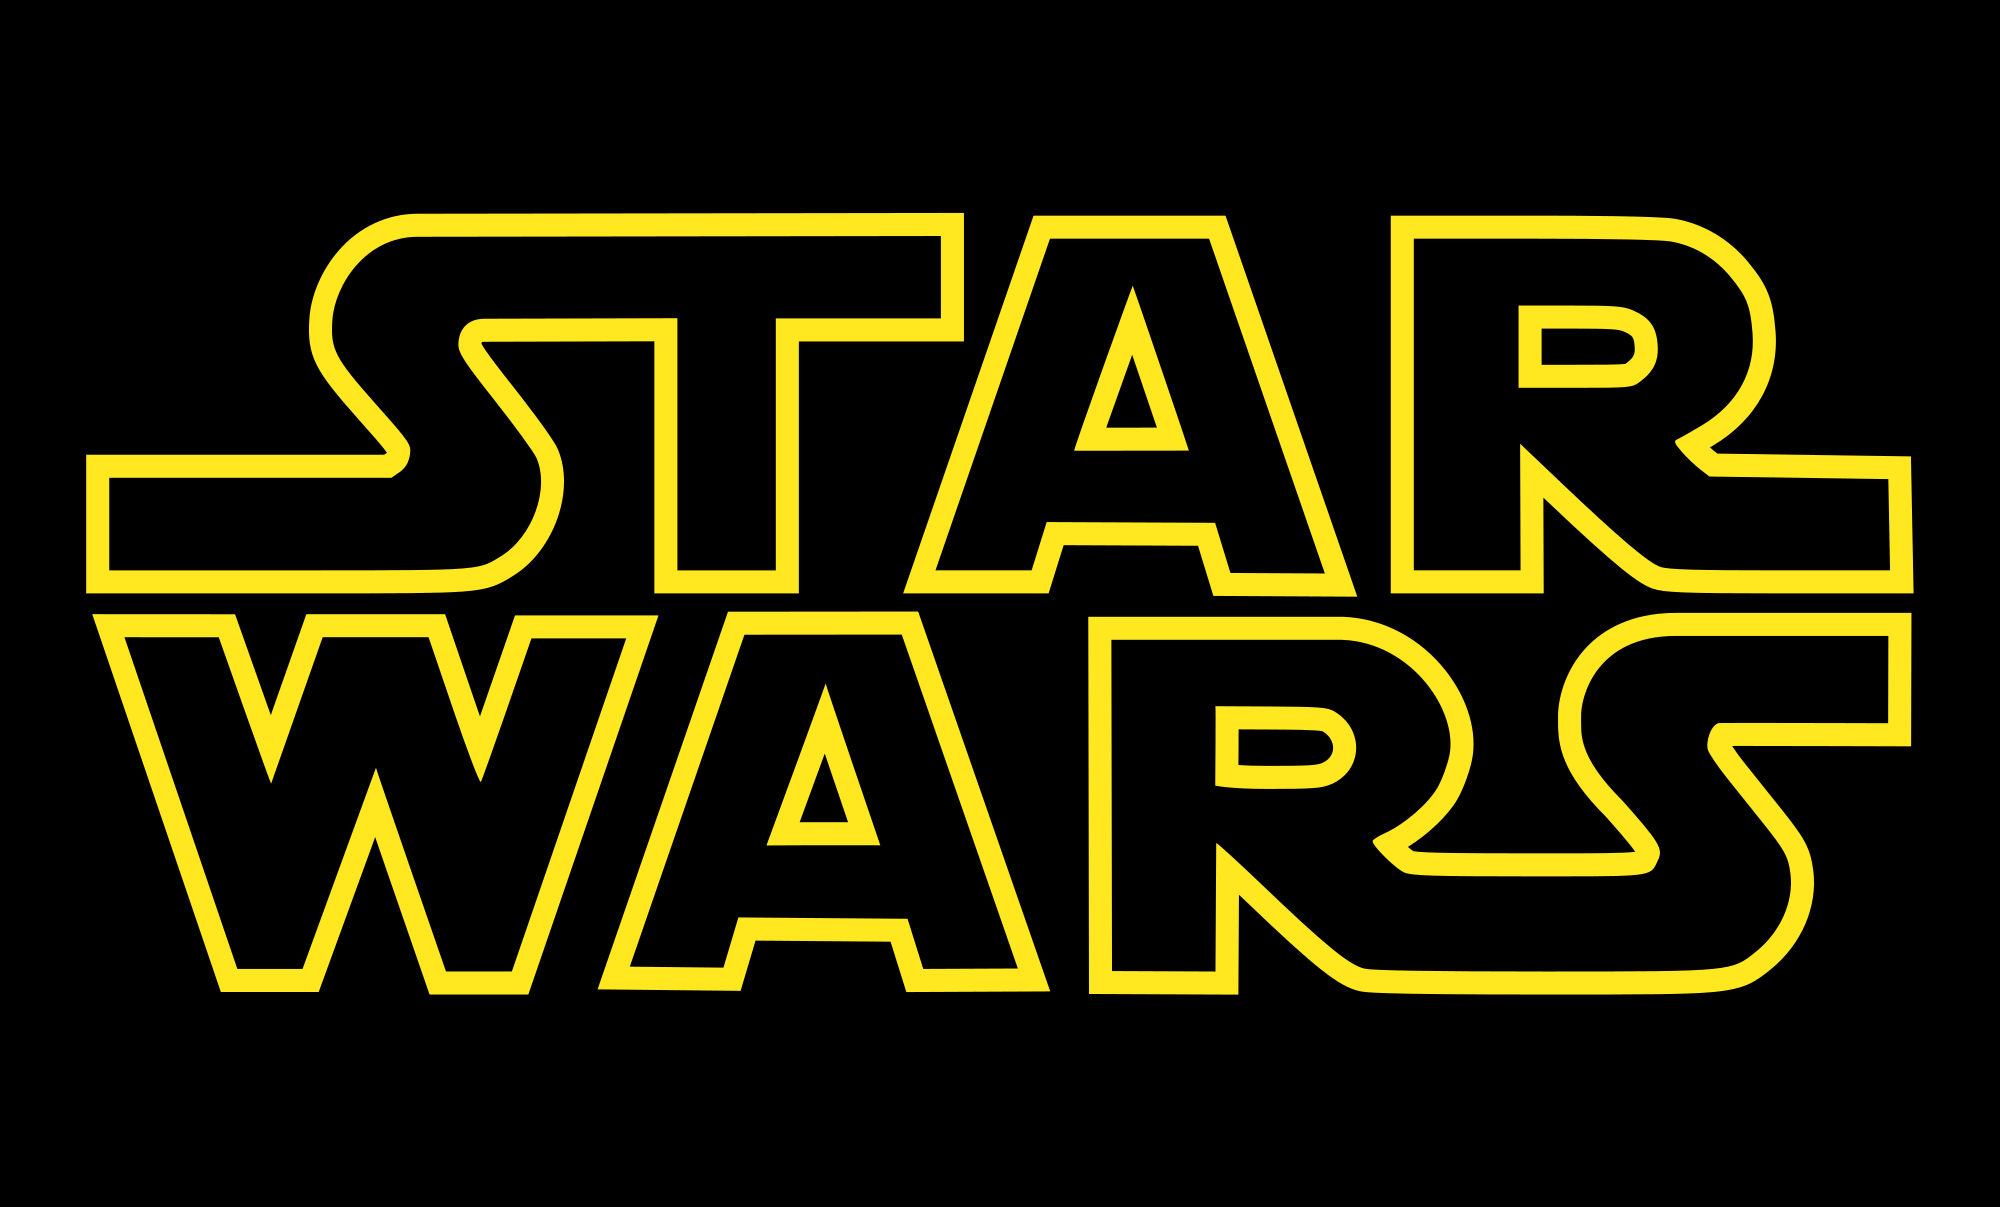 Star Wars logo on black